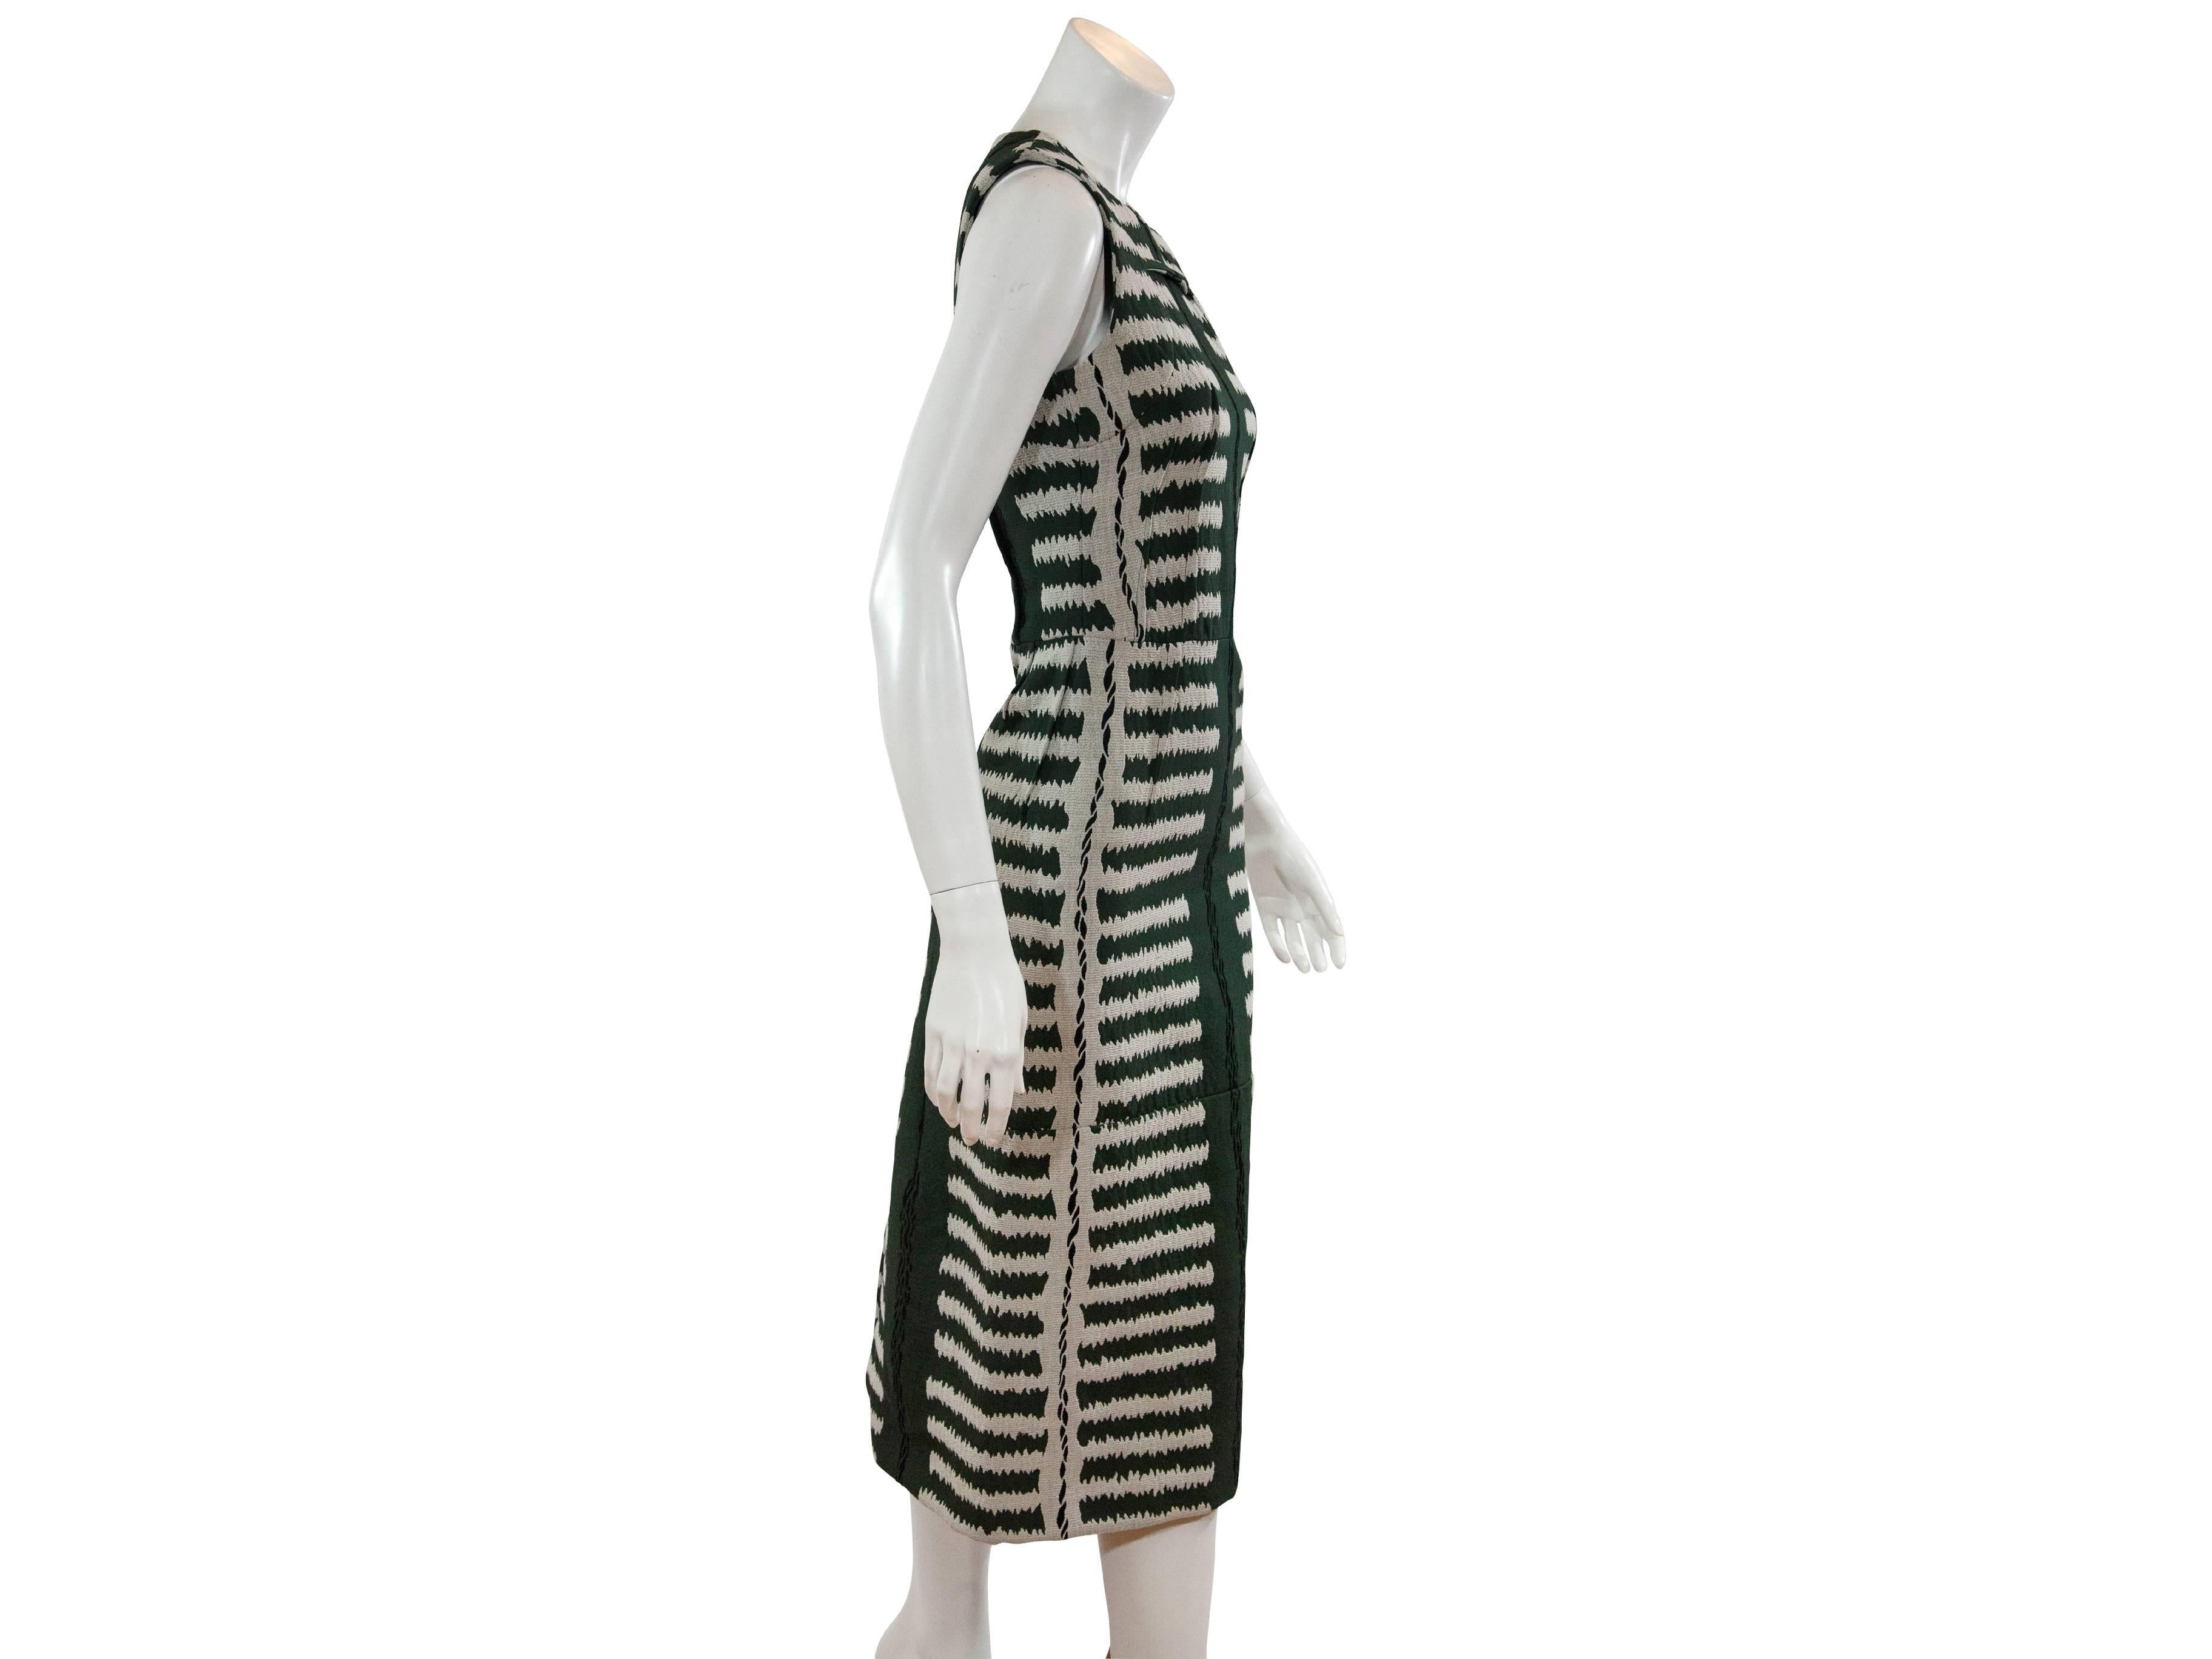 Modern green and ivory striped sheath dress by Marni.  Sleeveless.  Jewelneck.  Exposed back zip closure.  Asymmetrical back hem vent.